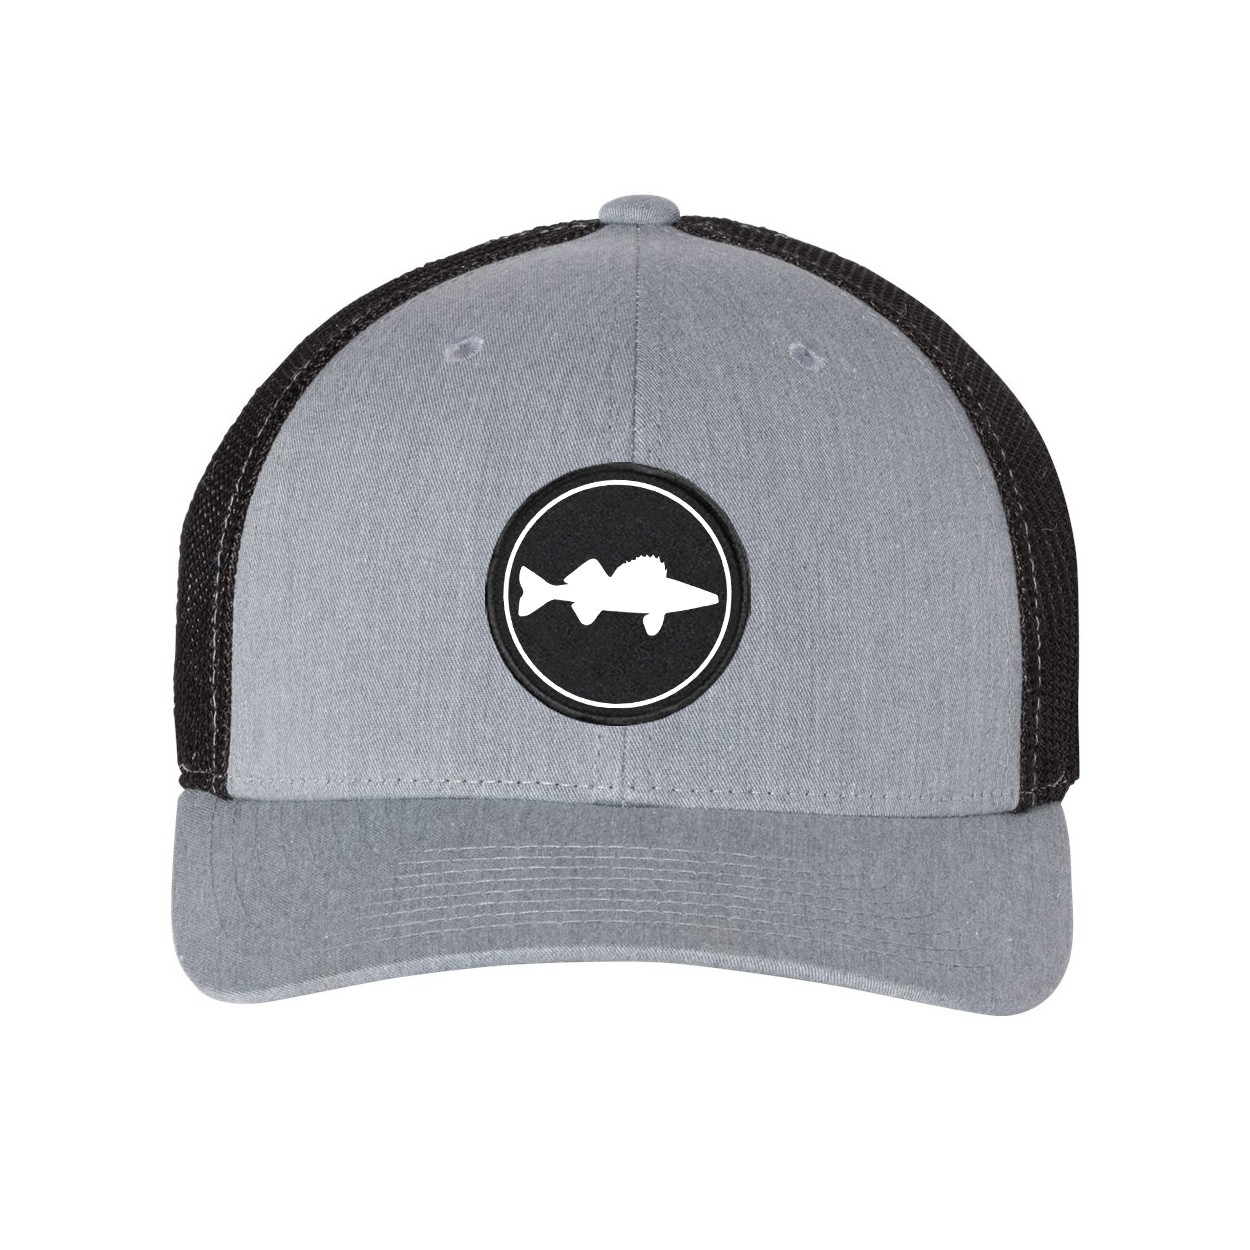 https://lifebrand.co/wp-content/blogs.dir/147/files/2022/04/fish-walleye-icon-logo-classic-woven-circle-patch-snapback-trucker-hat-heather-grayblack-white-logo-20220419224540.jpg